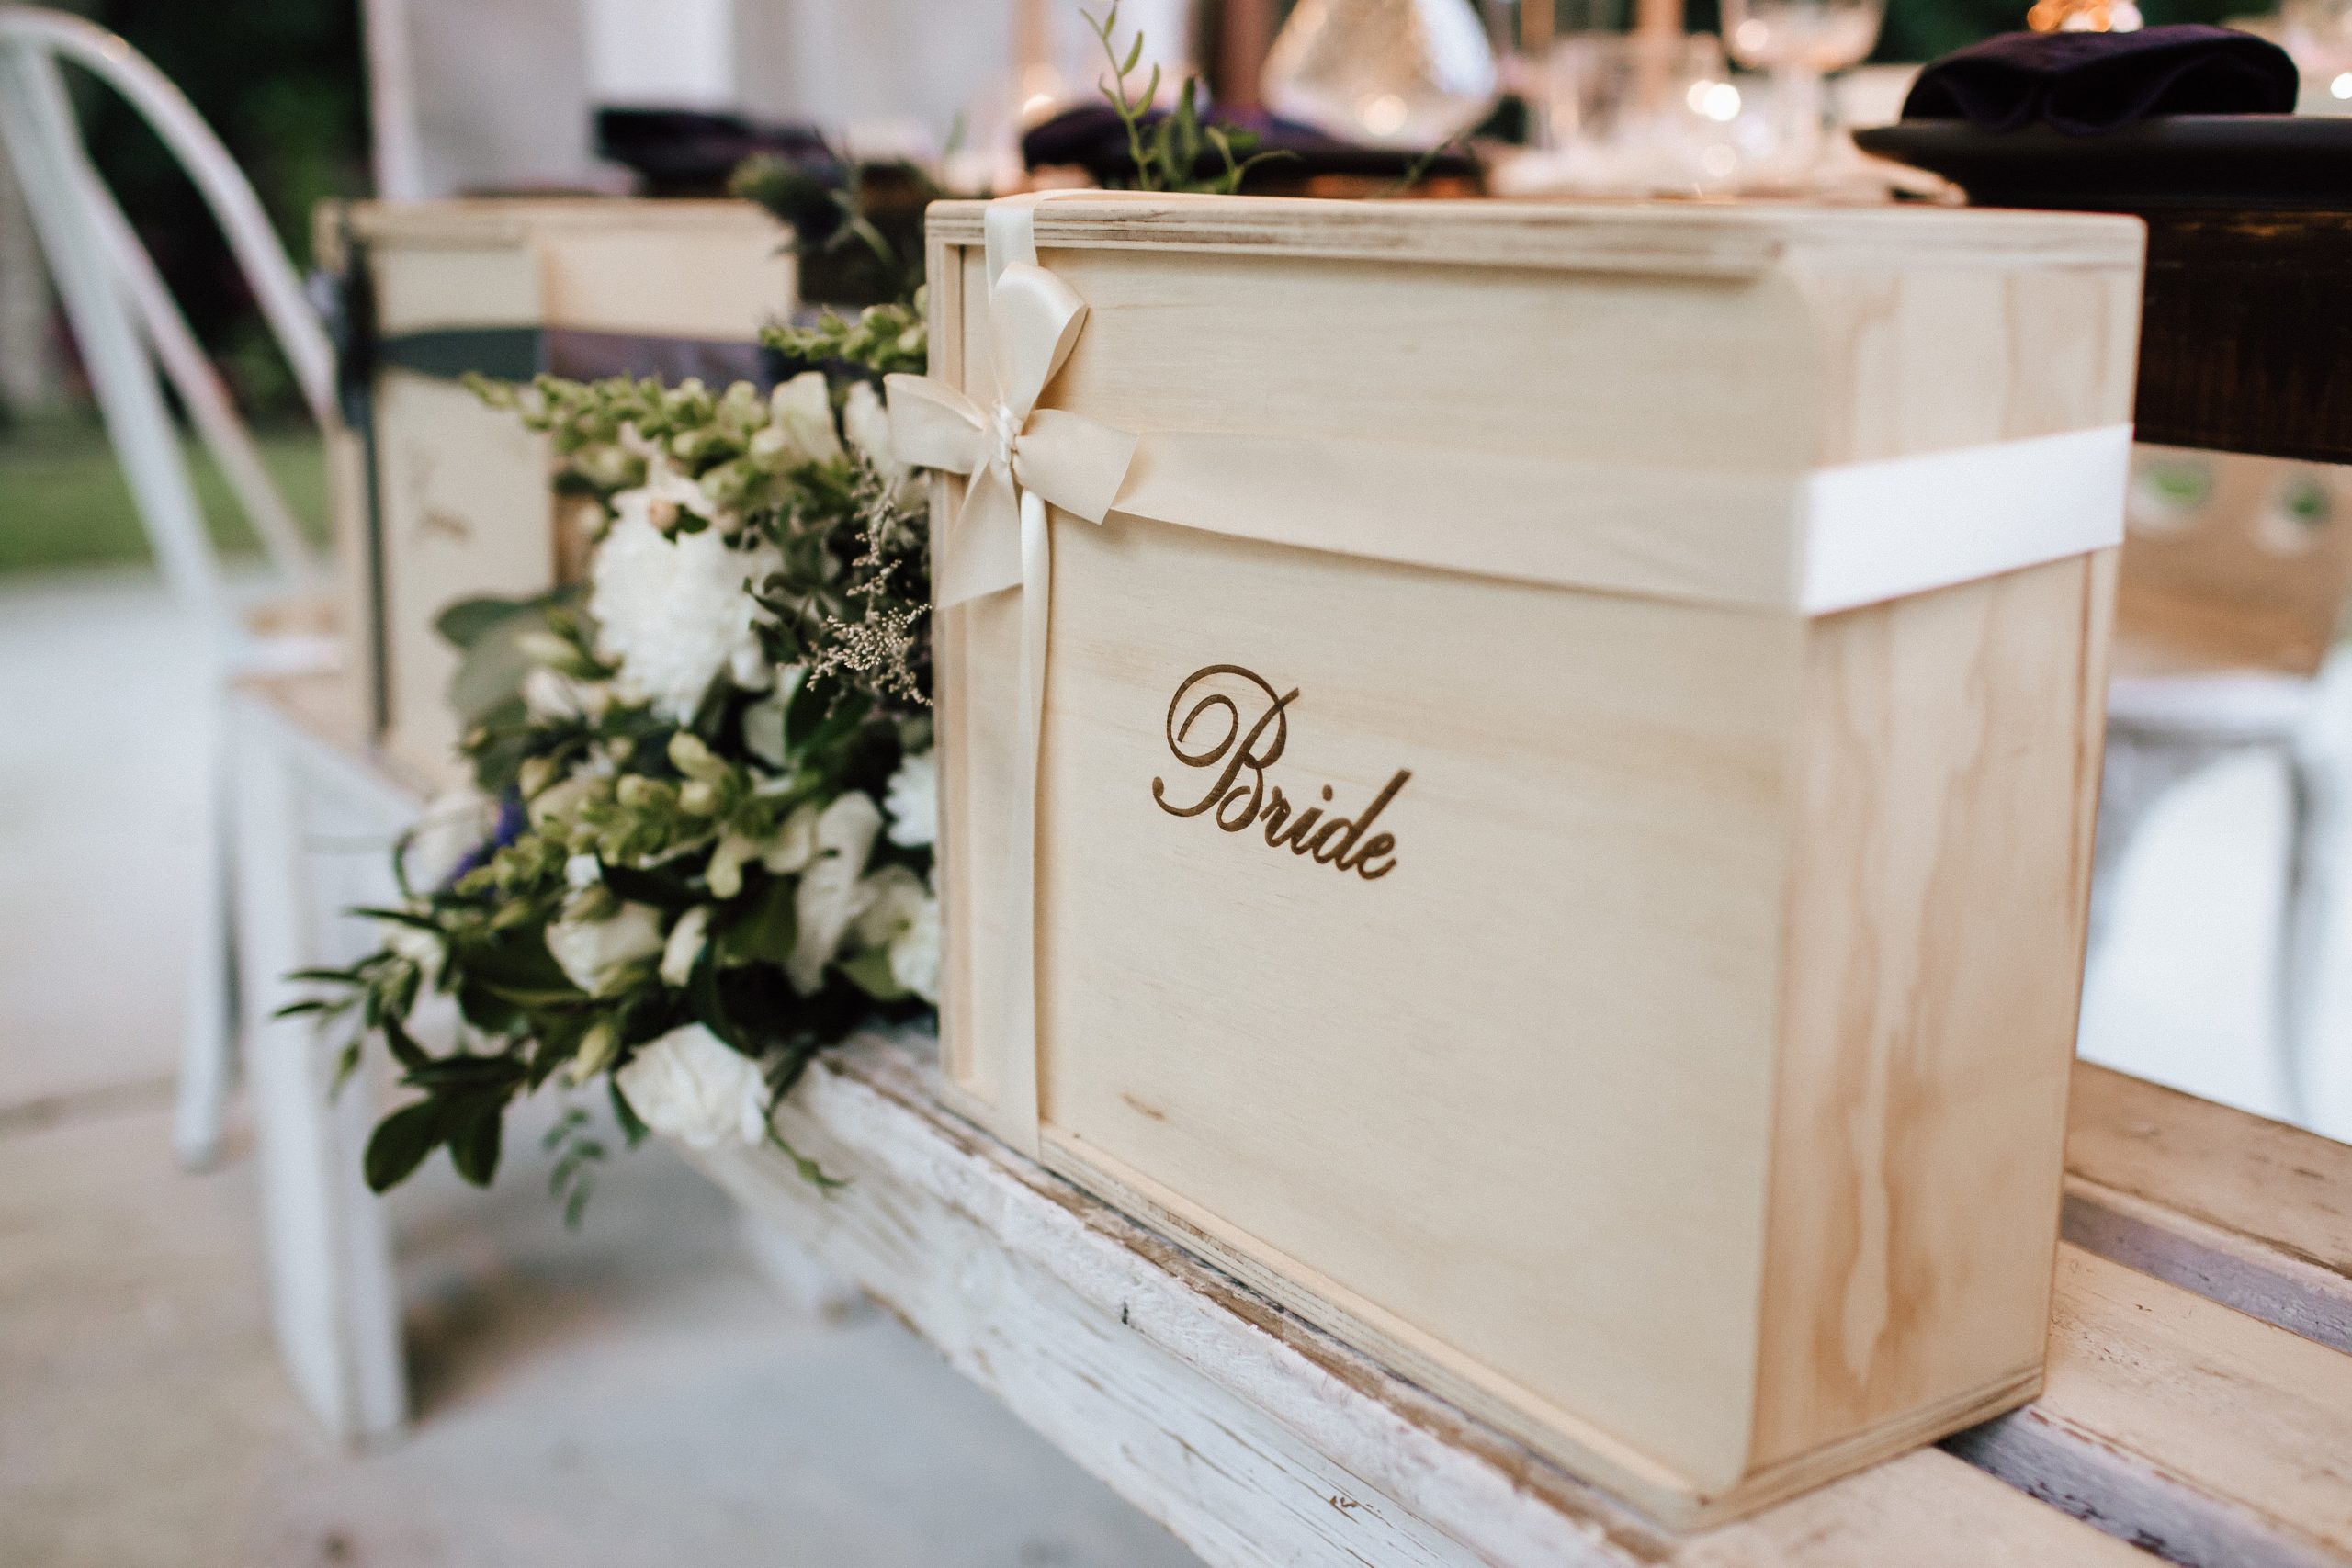 bride gift box from The Bridal Box